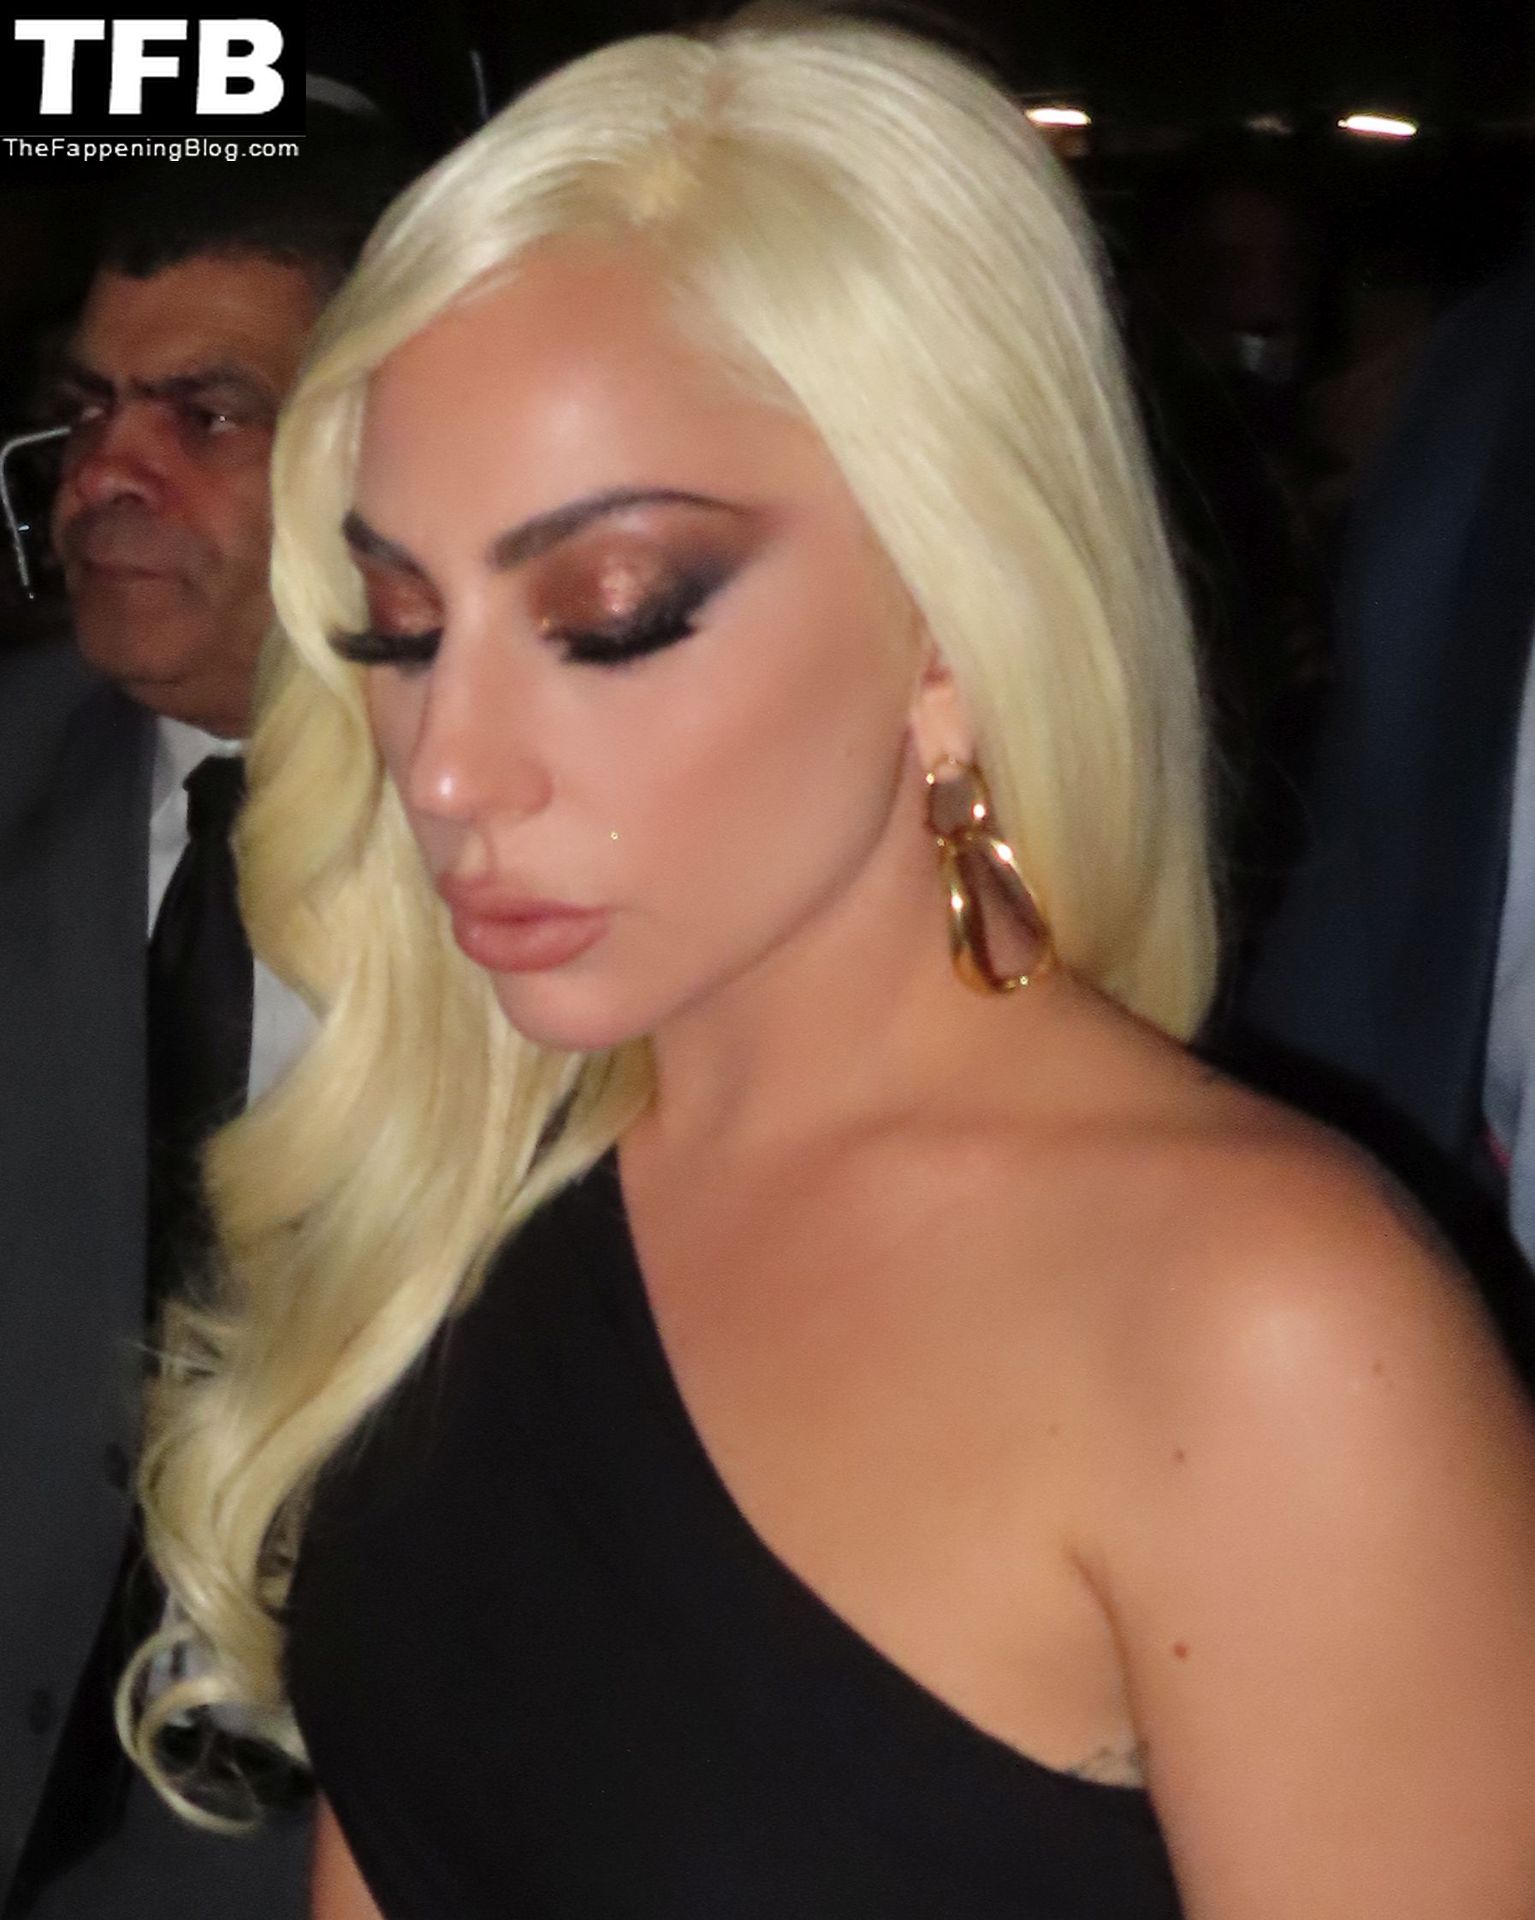 Lady-Gaga-Sexy-The-Fappening-Blog-52-1.jpg